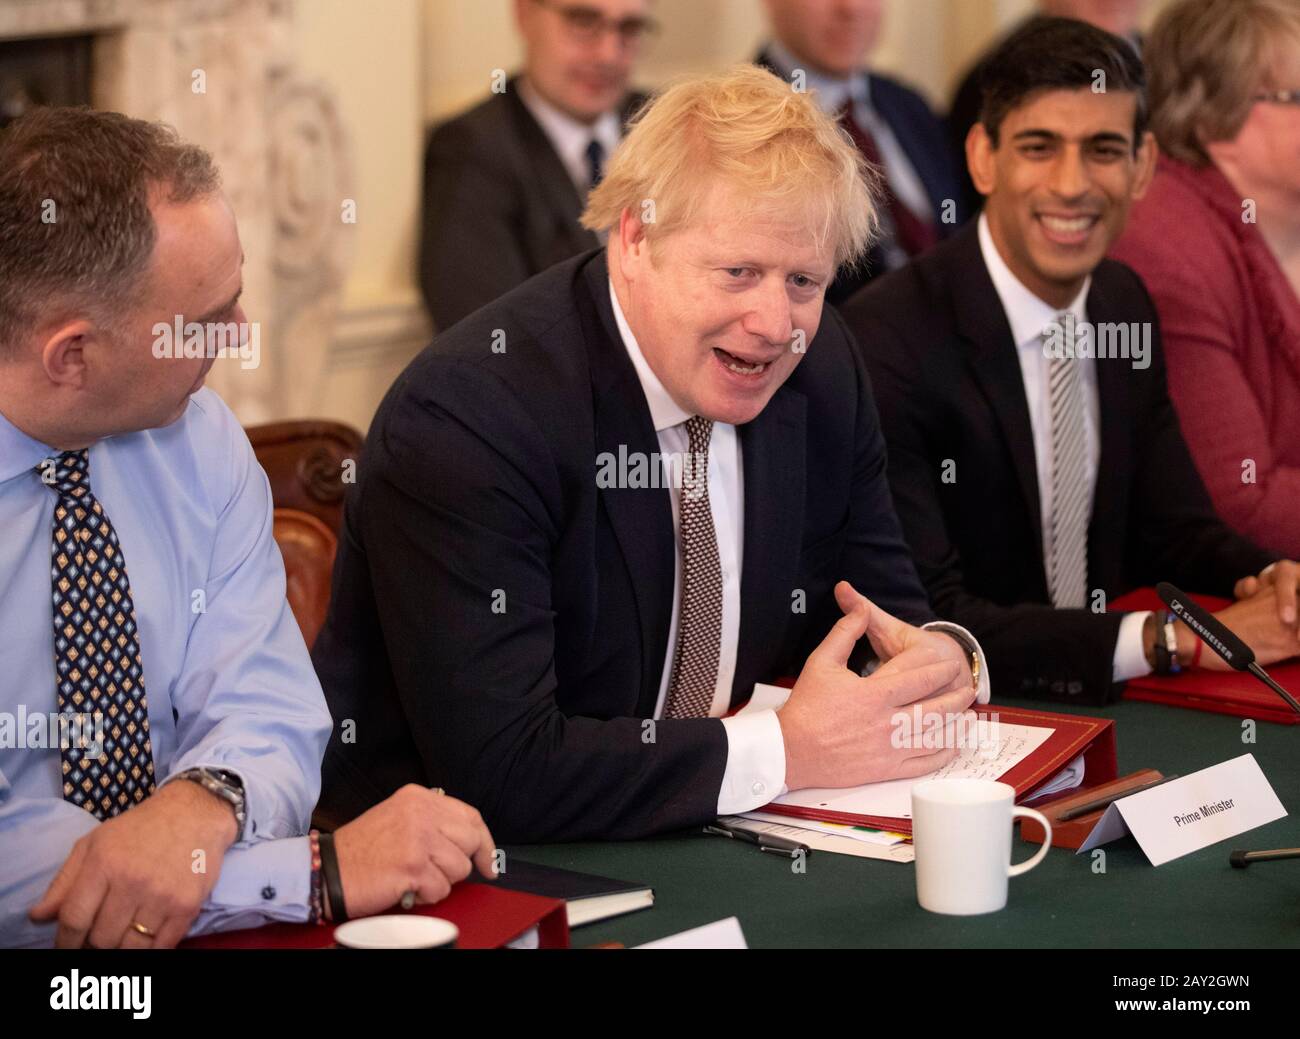 Prime Minister Boris Johnson Alongside New Chancellor Of The